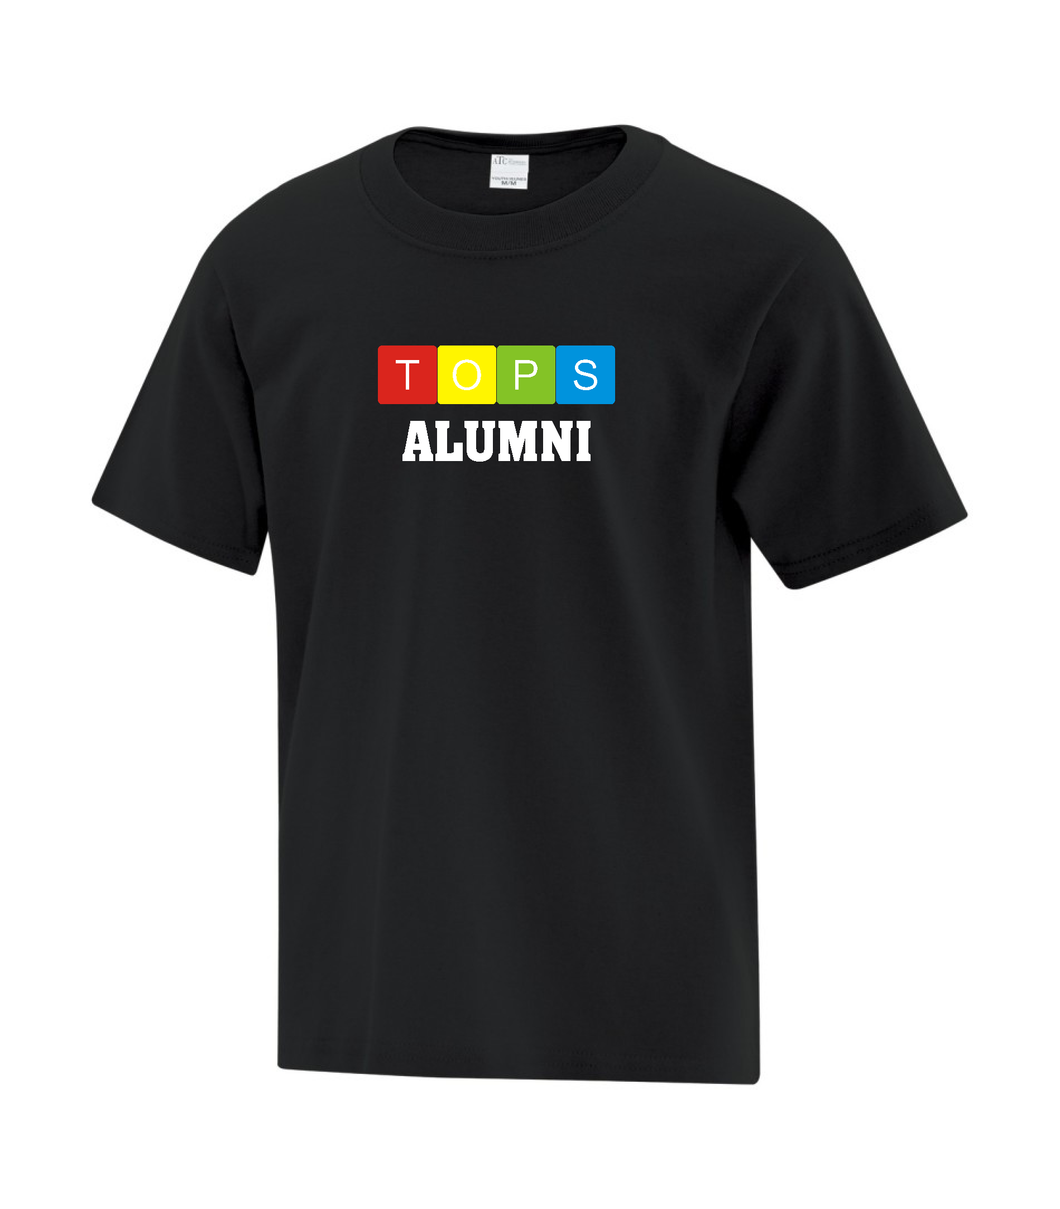 Youth T-Shirt - ALUMNI with TOPS blocks logo